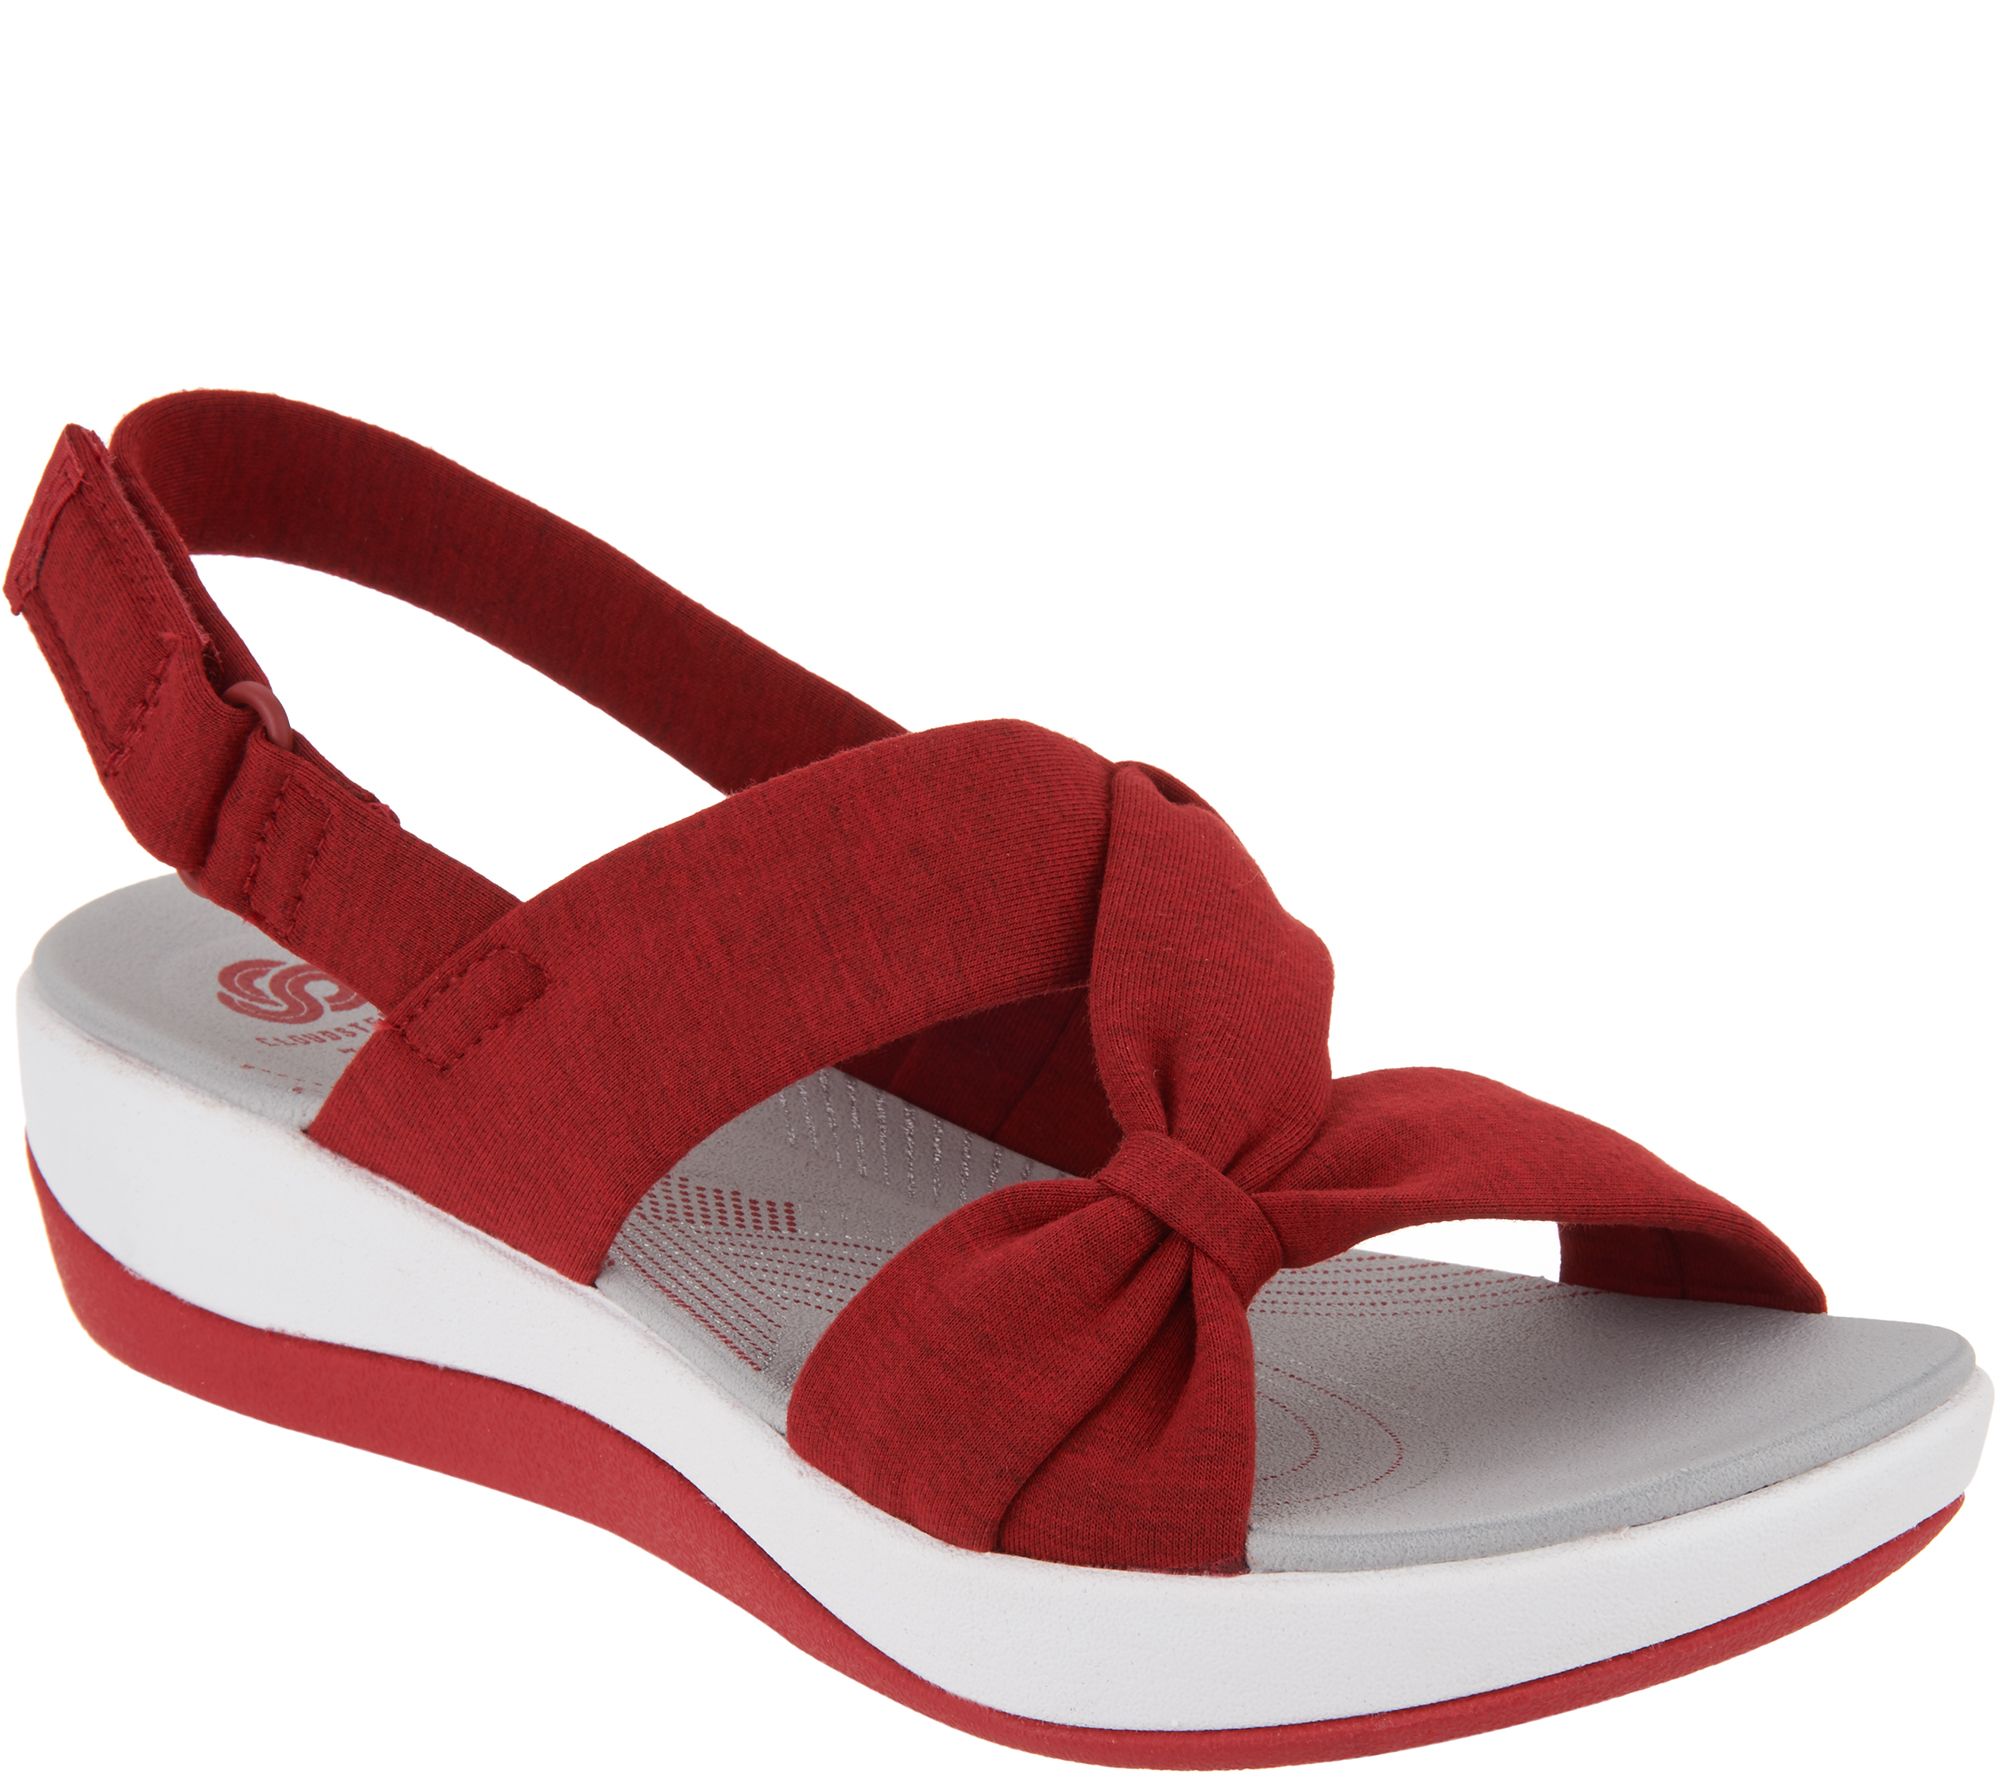 Clarks Sport Sandals - Arla Primrose 